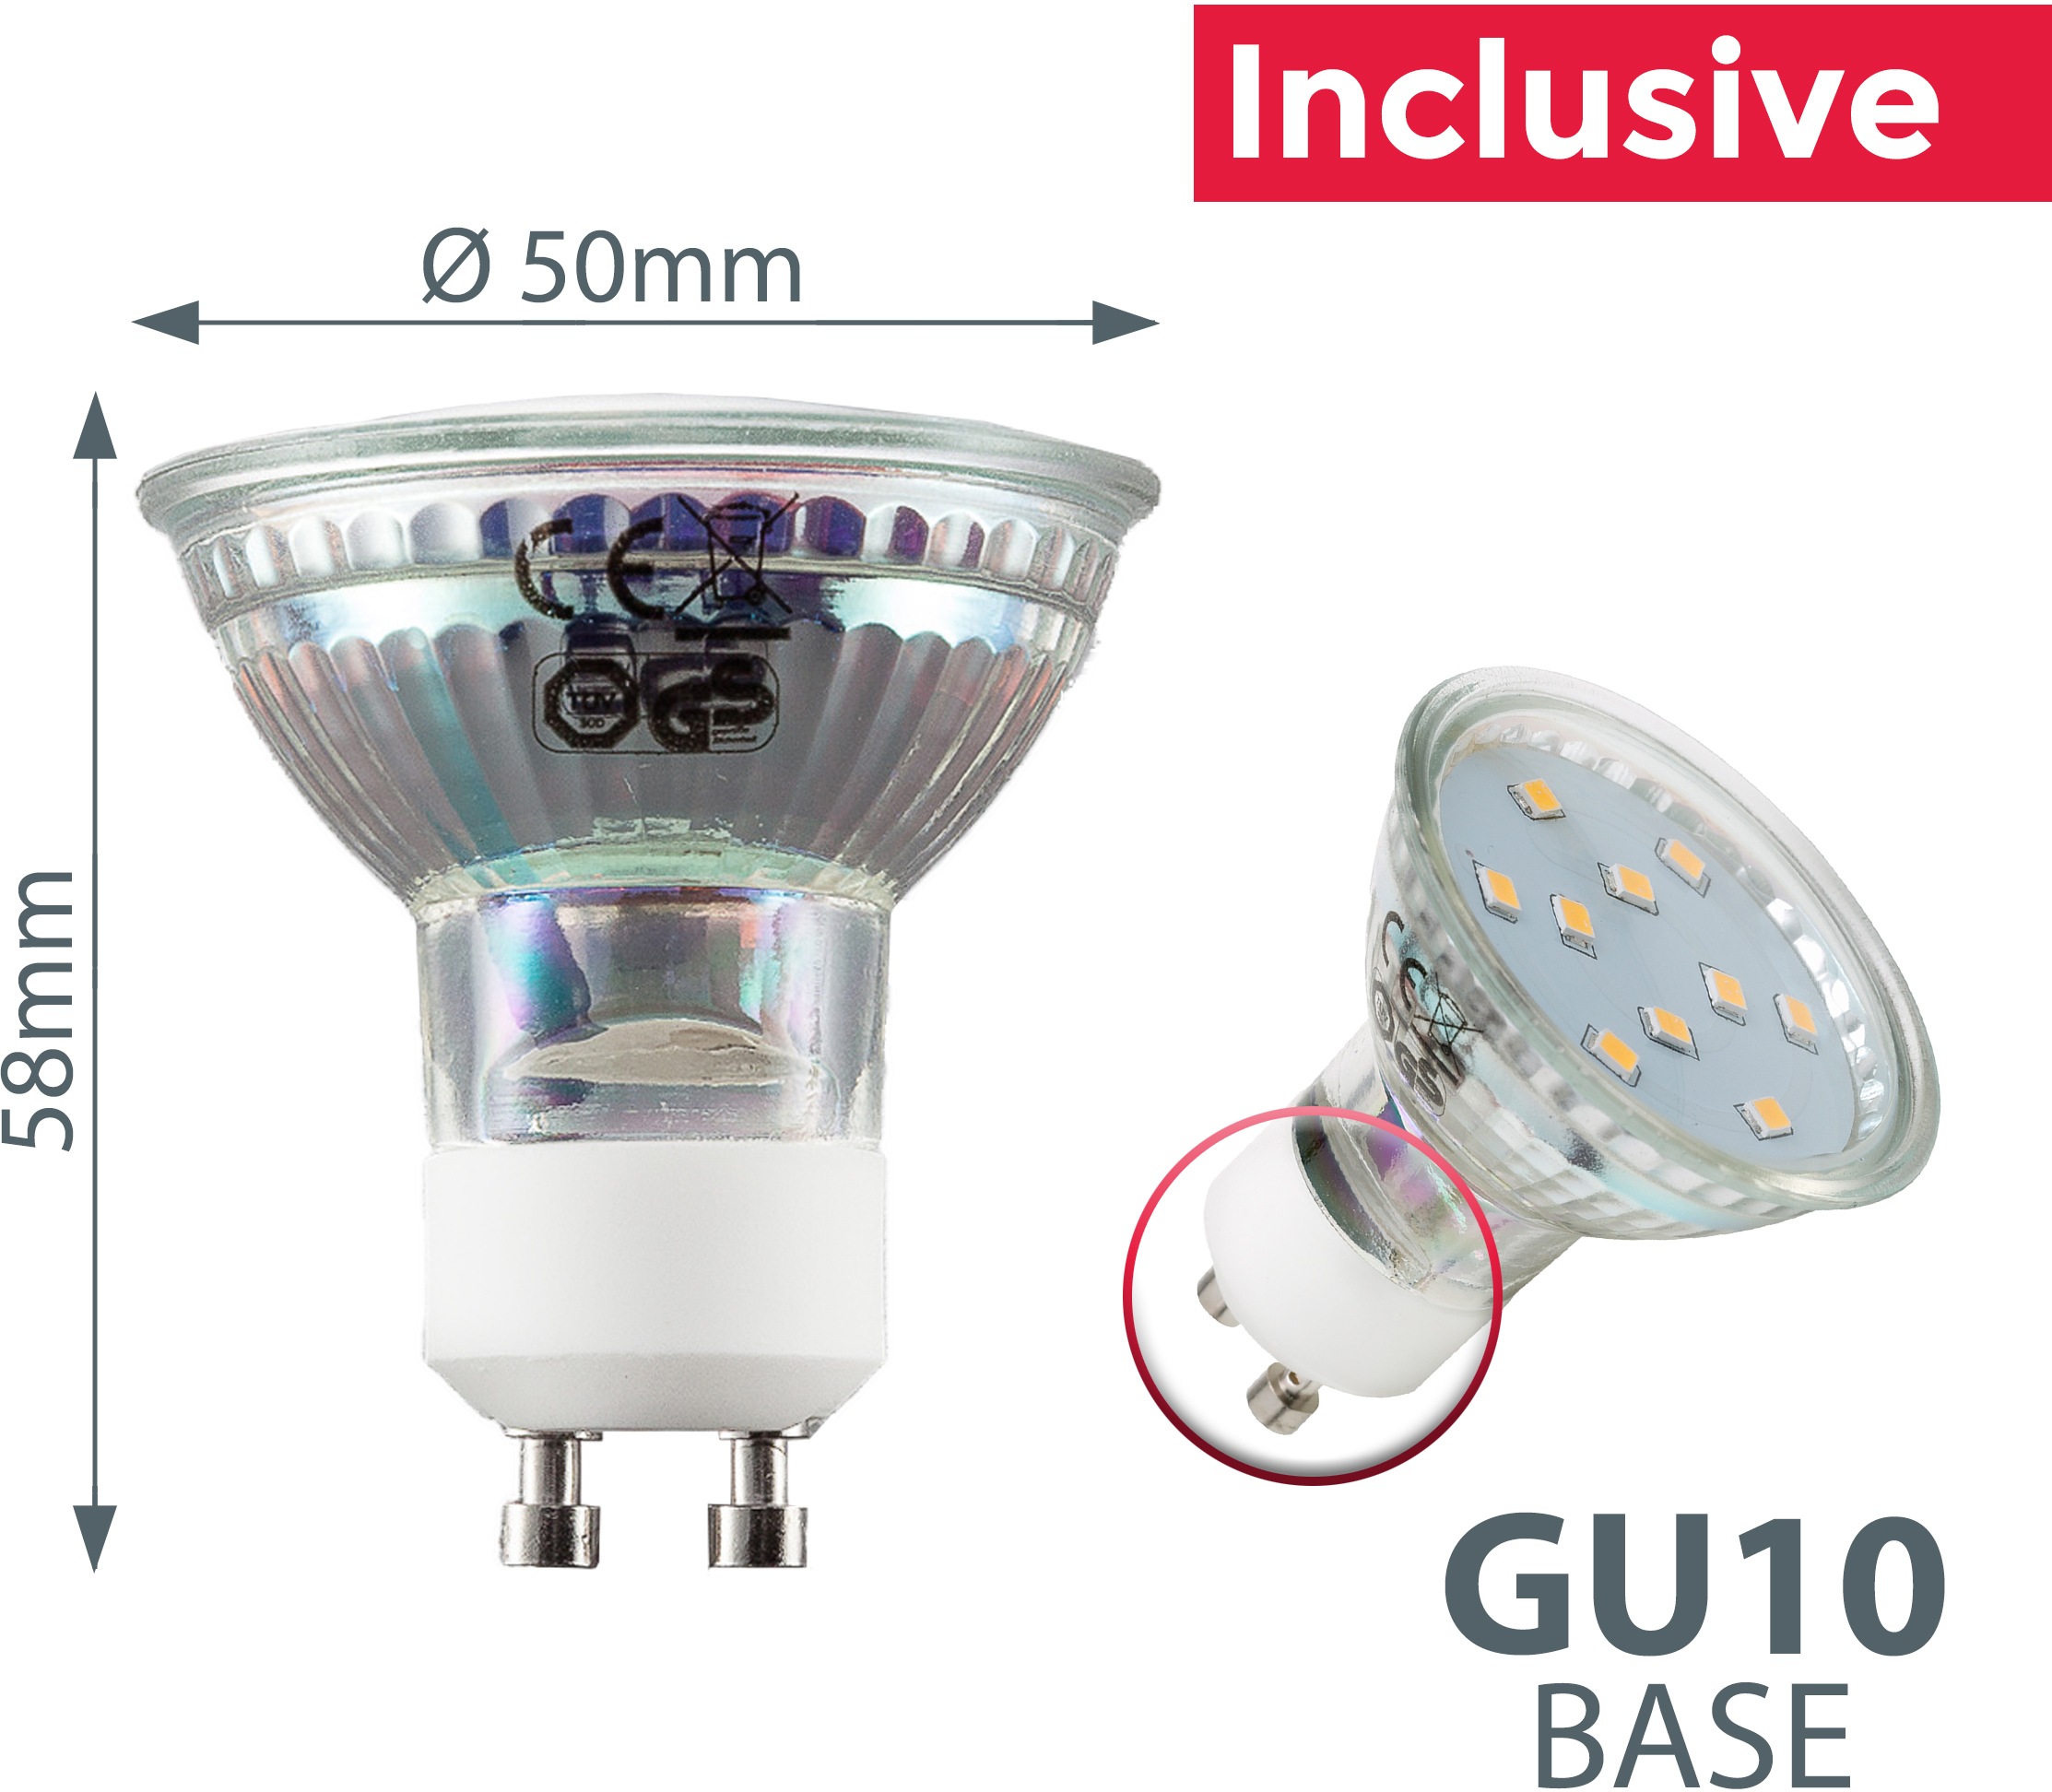 B.K.Licht LED Deckenleuchte, 3 flammig-flammig, LED Design Deckenlampe Spot-Strahler GU10 modern chrom inkl. 3W 250lm